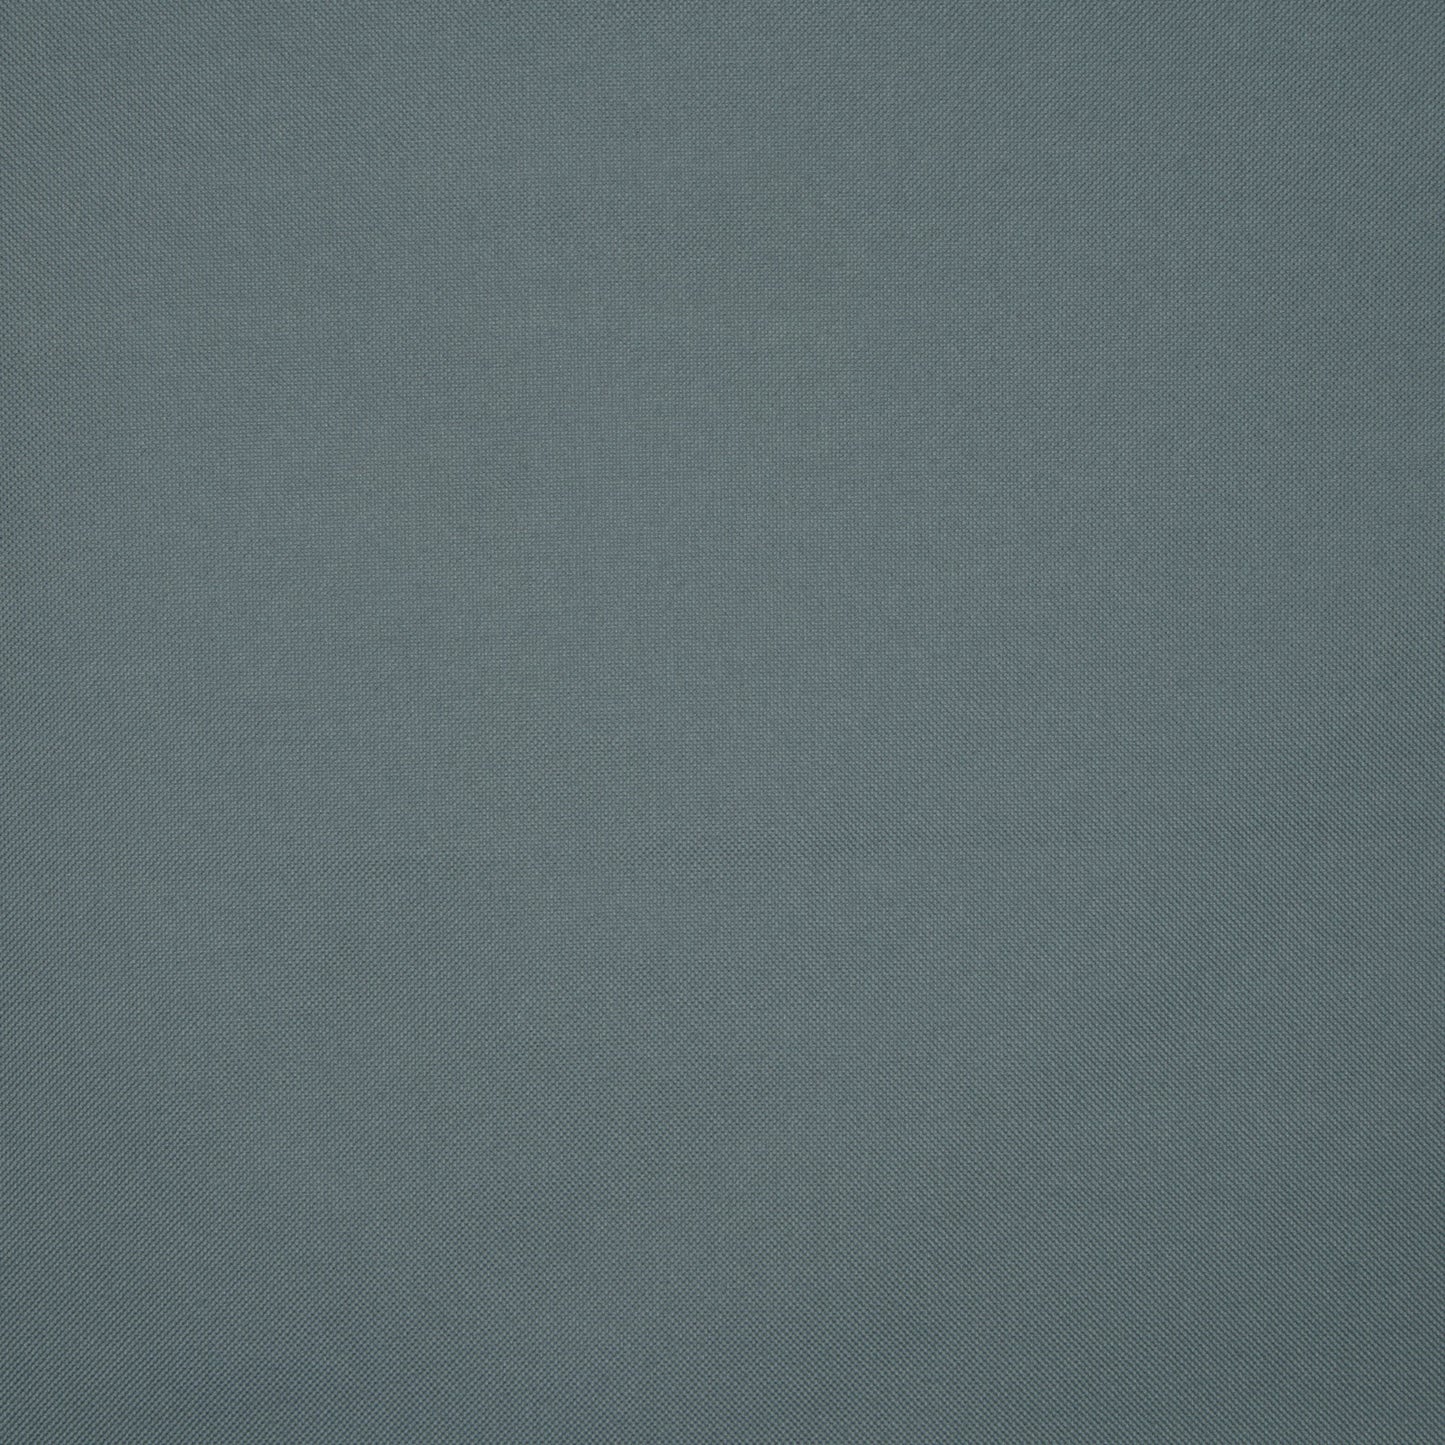 Nylon Canvas 600D dark grey